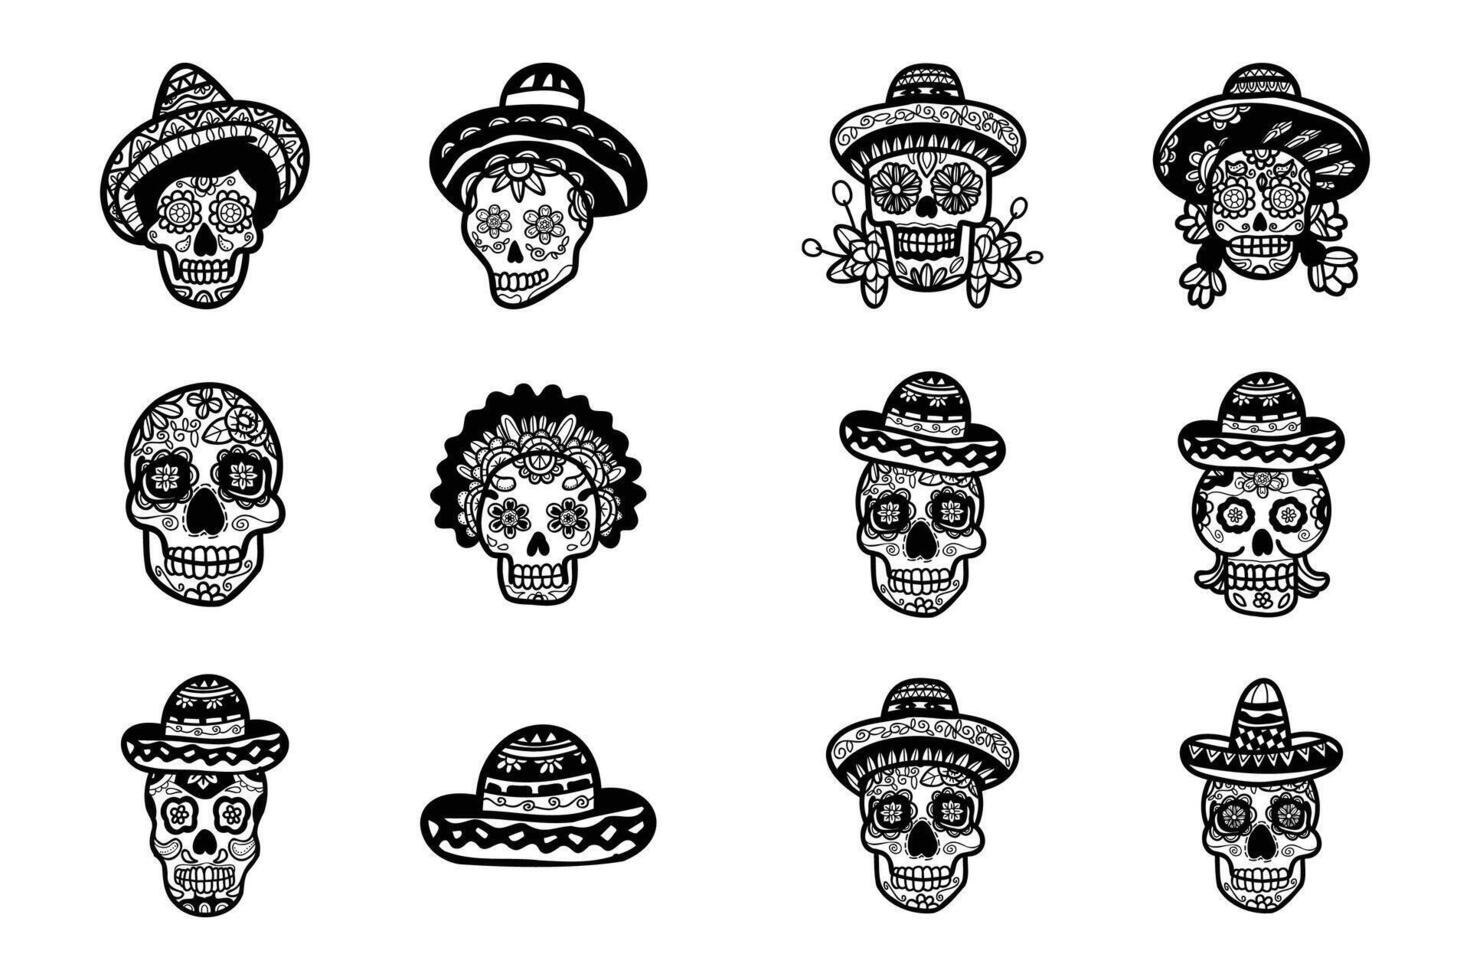 calavera mexican skull hand drawn illustration on background set vector